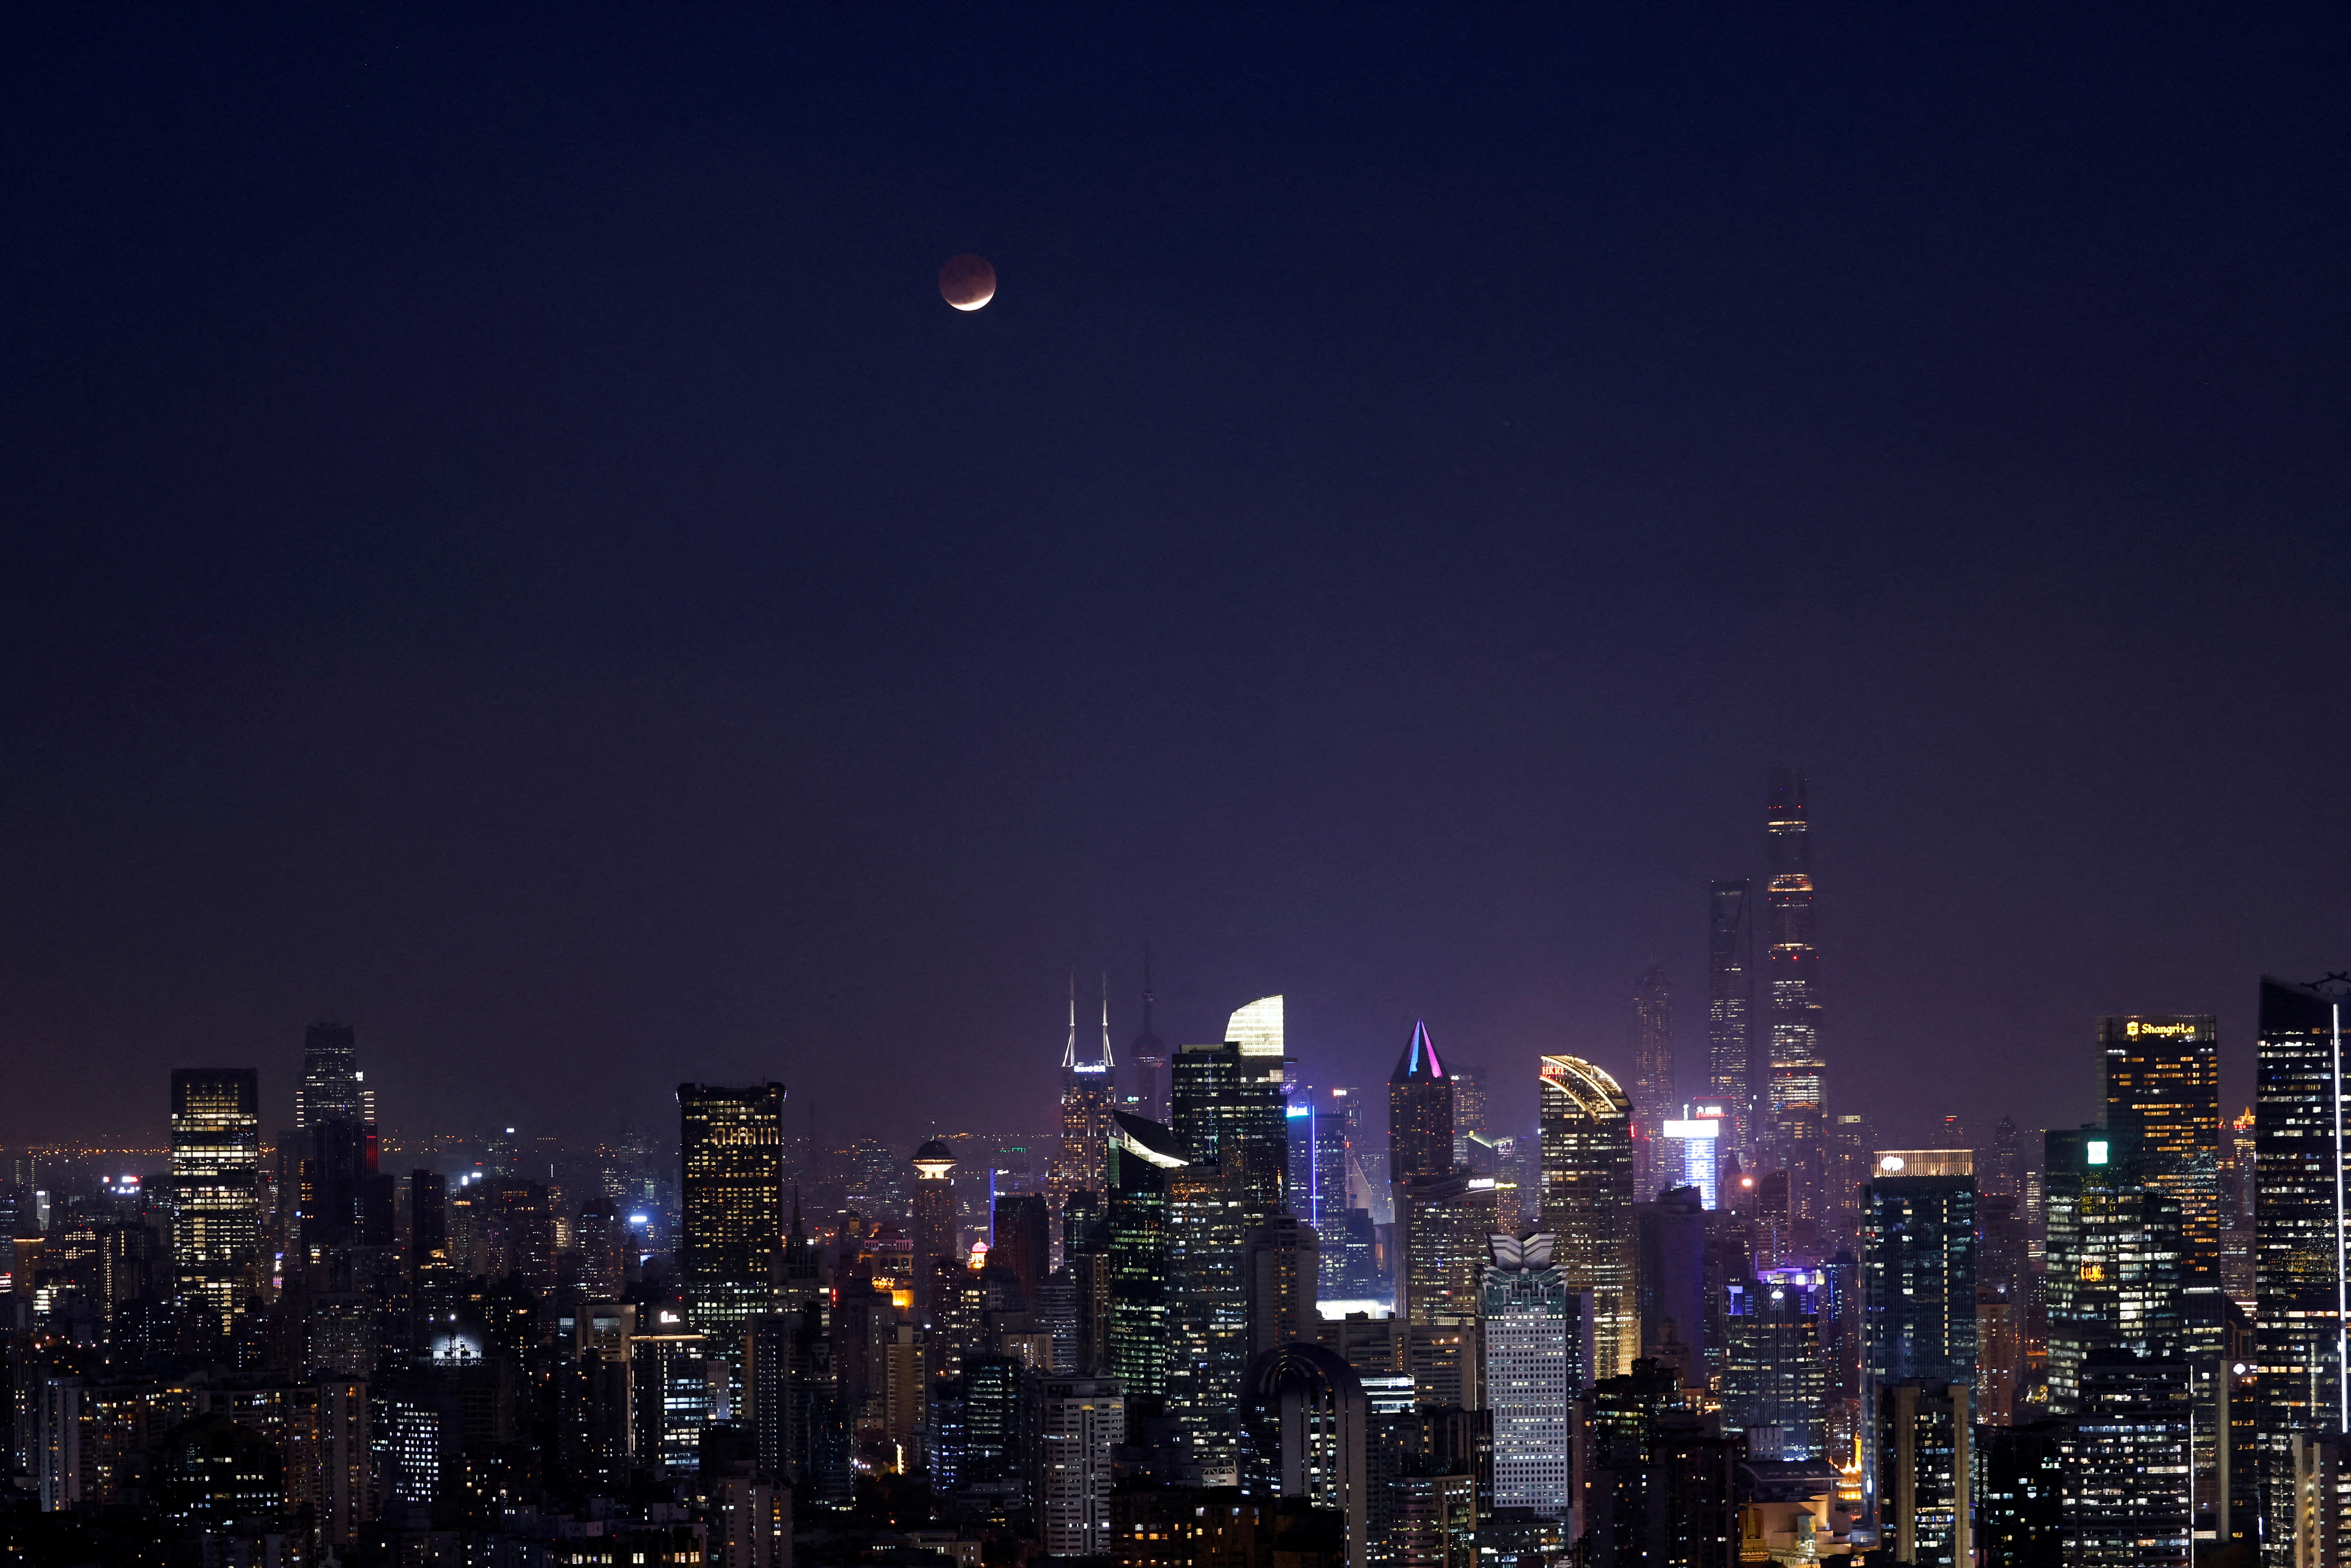 Lunar eclipse rises over the skyline of Shanghai